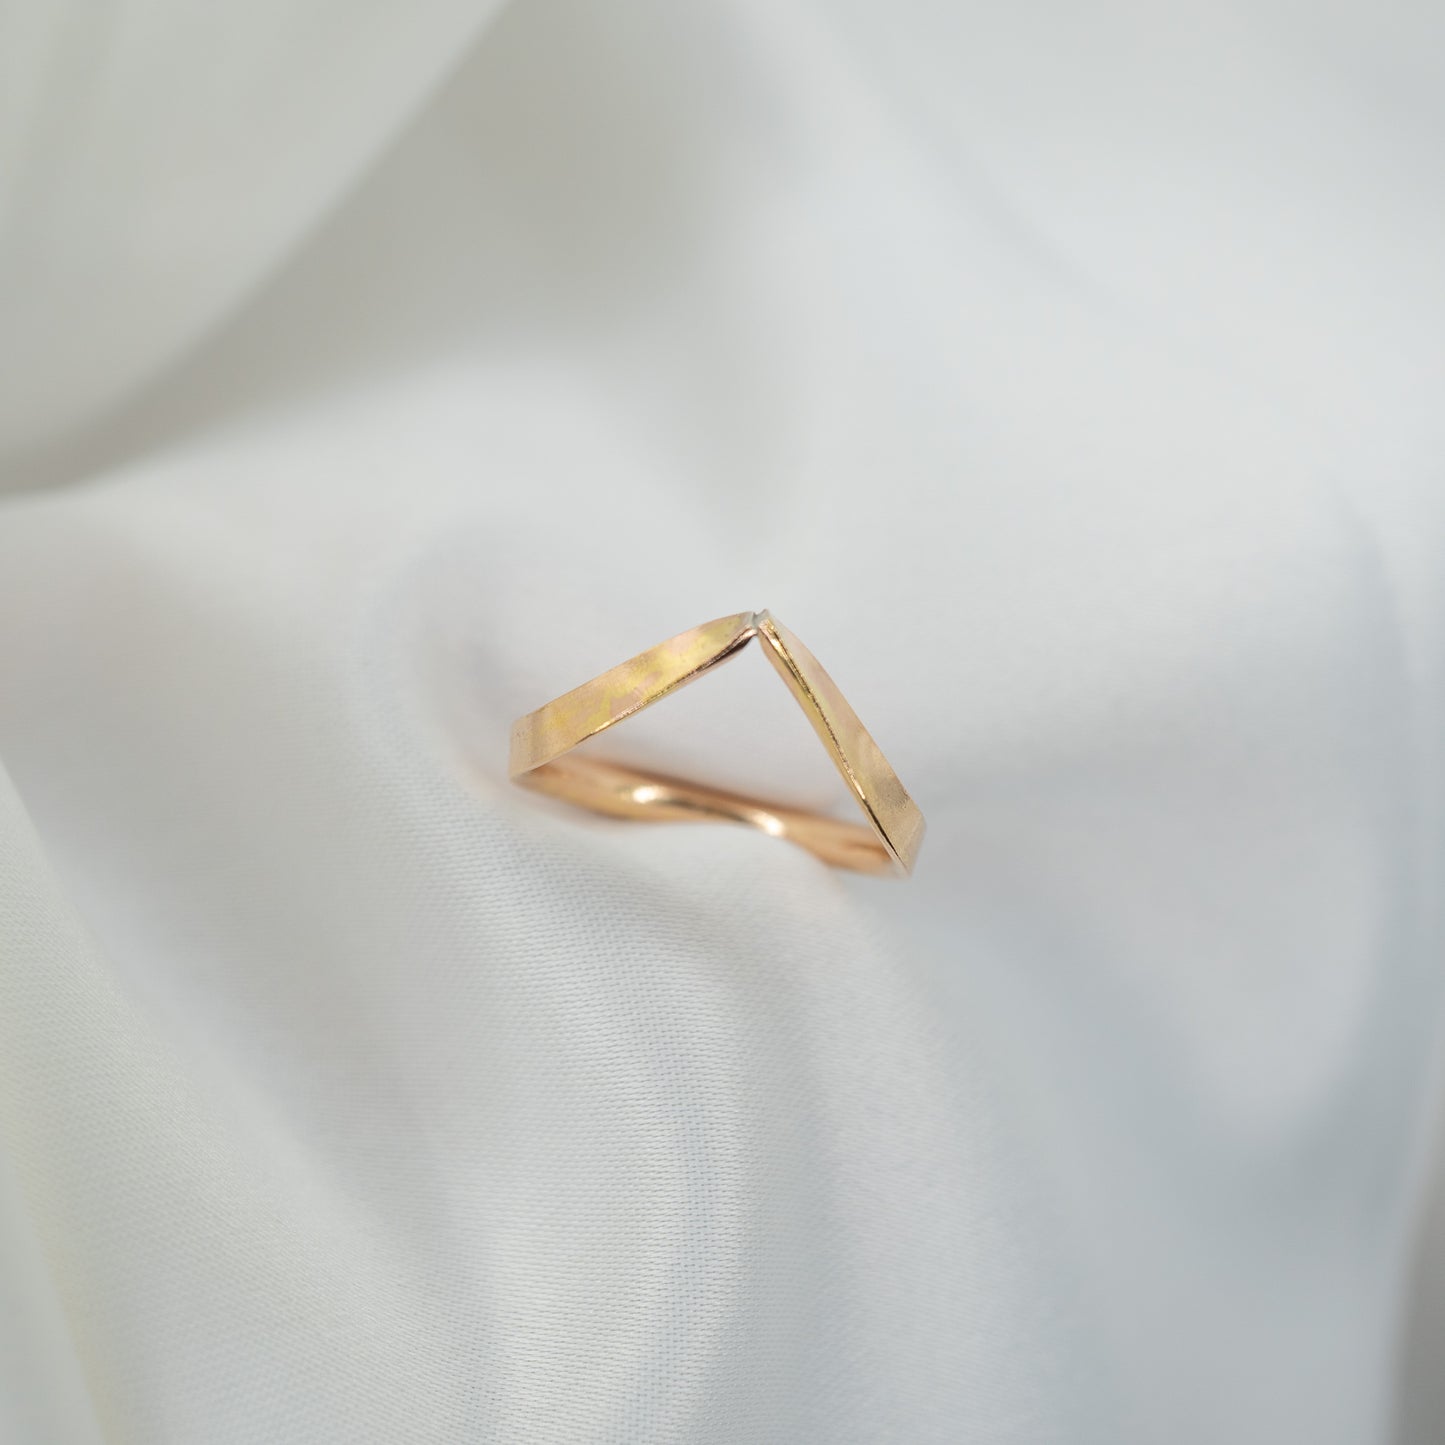 Gold Filled Chevron Ring - shot on white - aerial